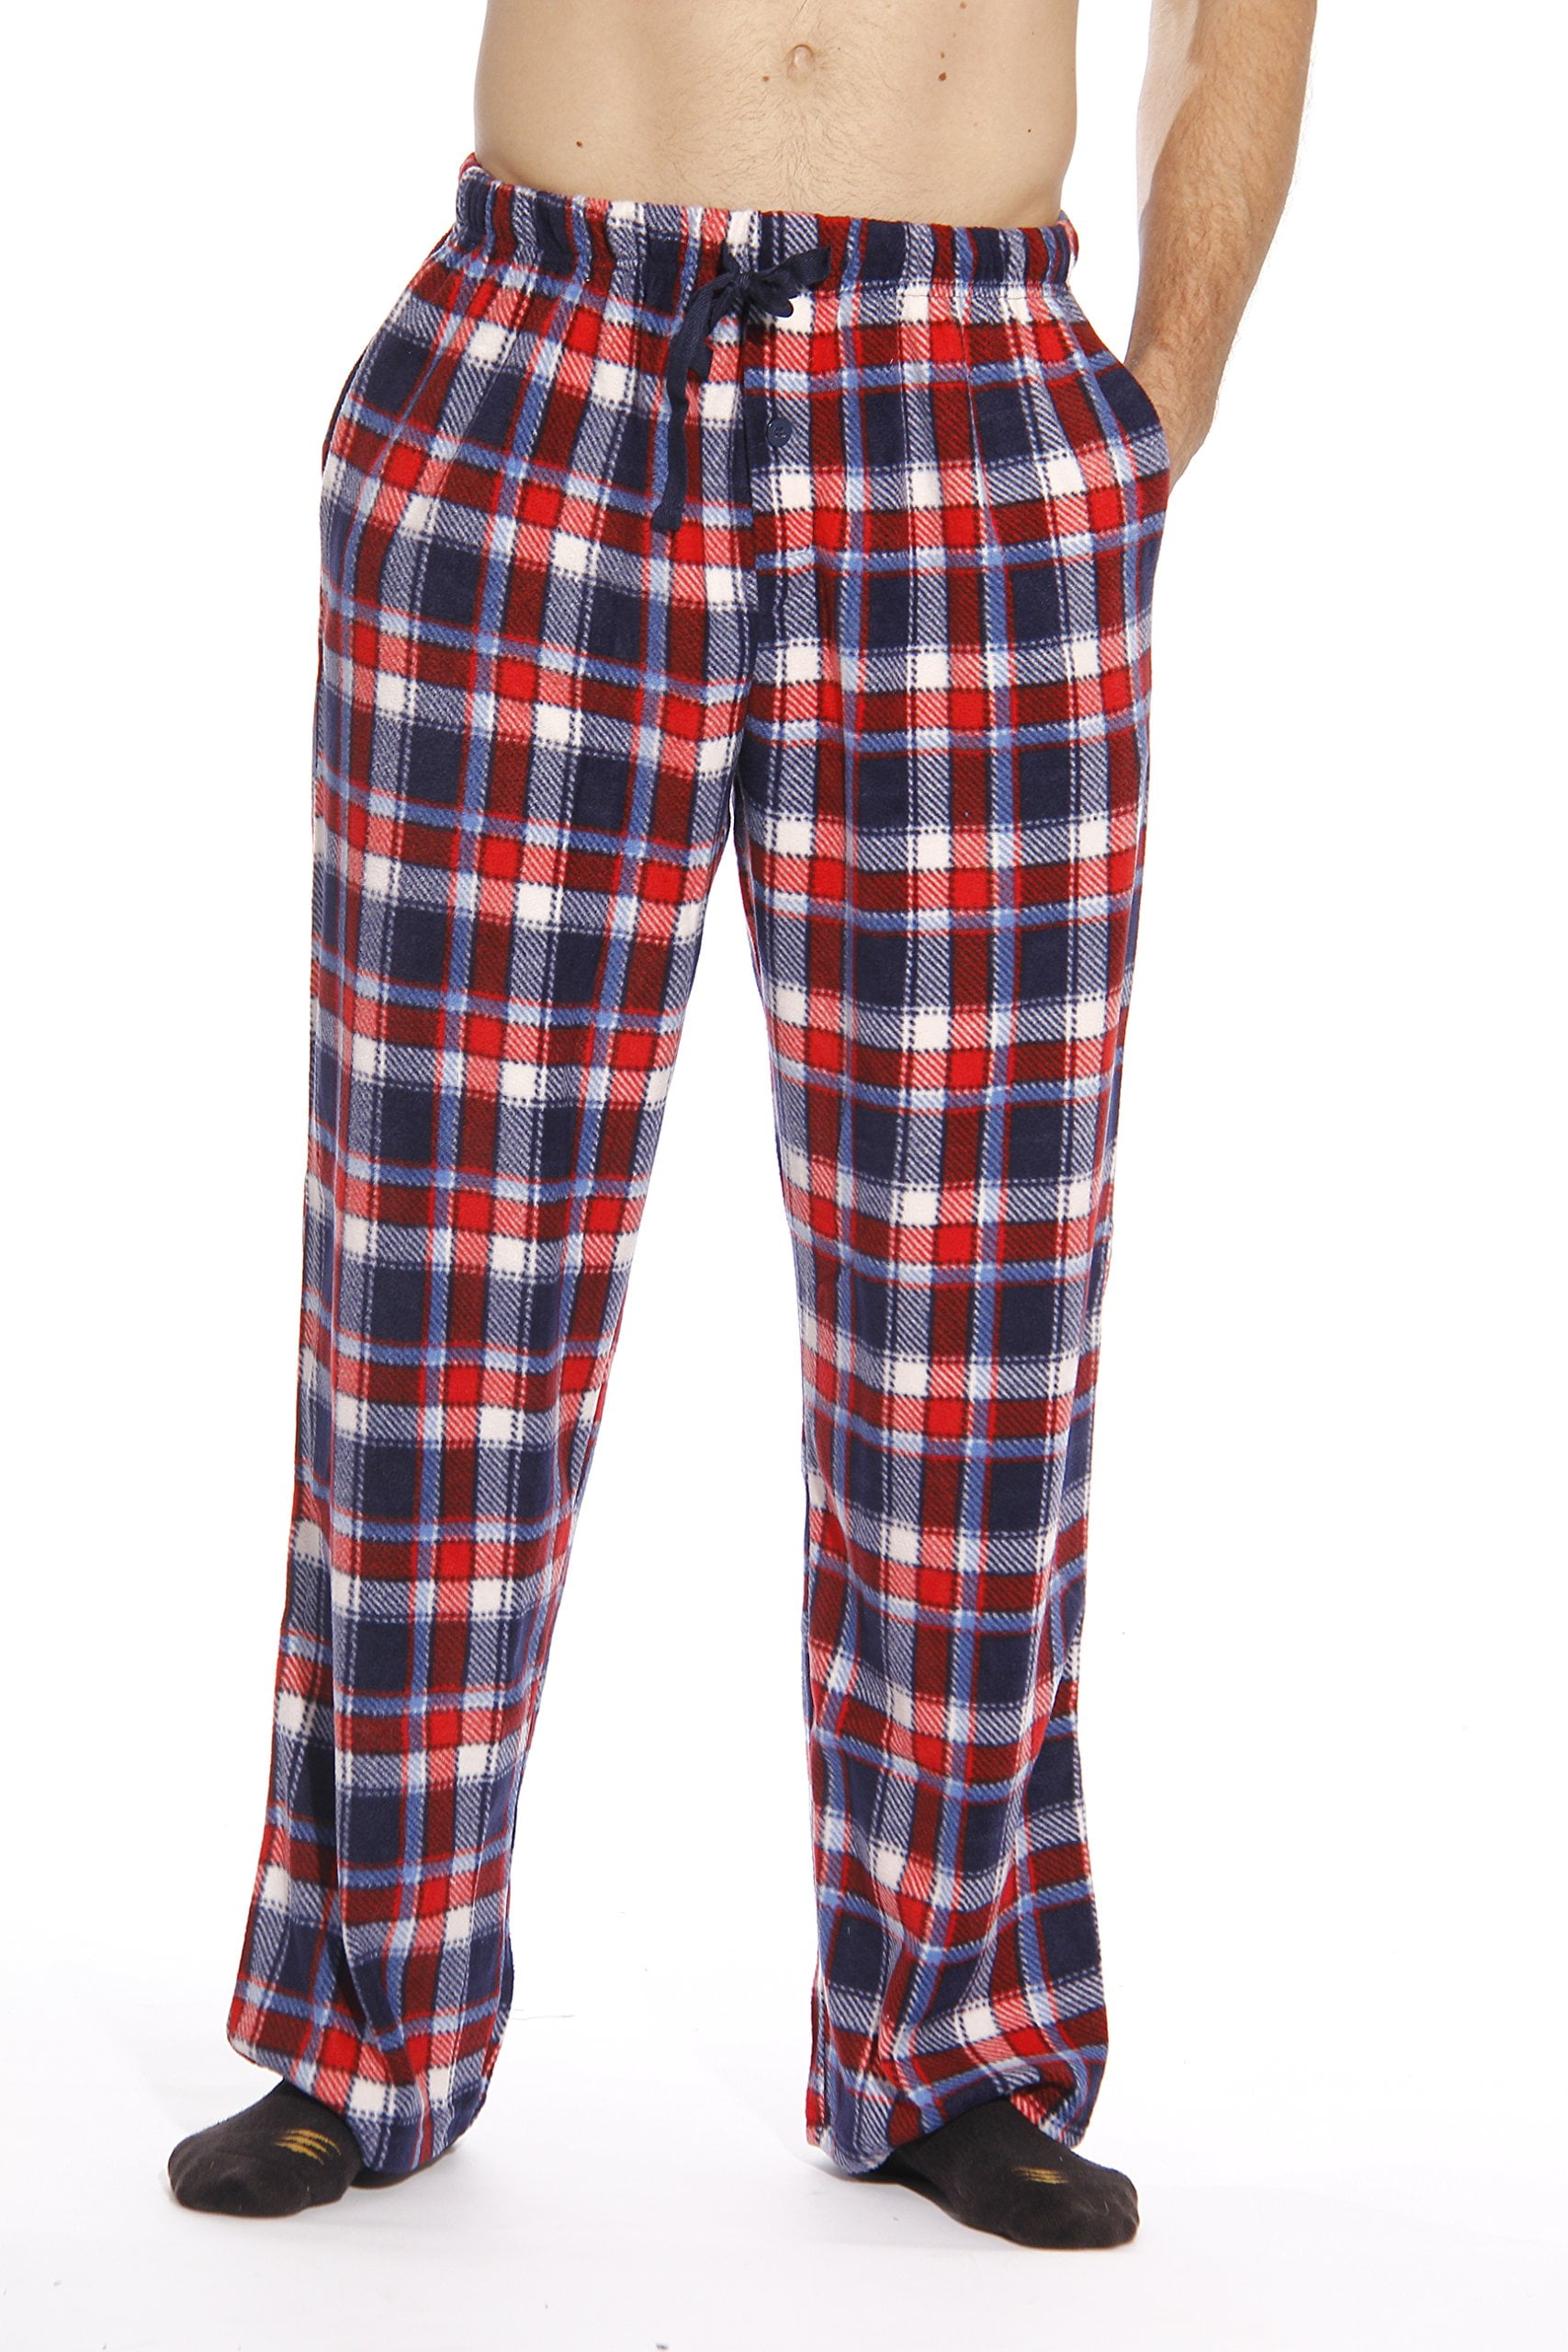 followme Microfleece Men's Buffalo Plaid Pajama Pants with Pockets (Red,  White & Blue Plaid, Large) 